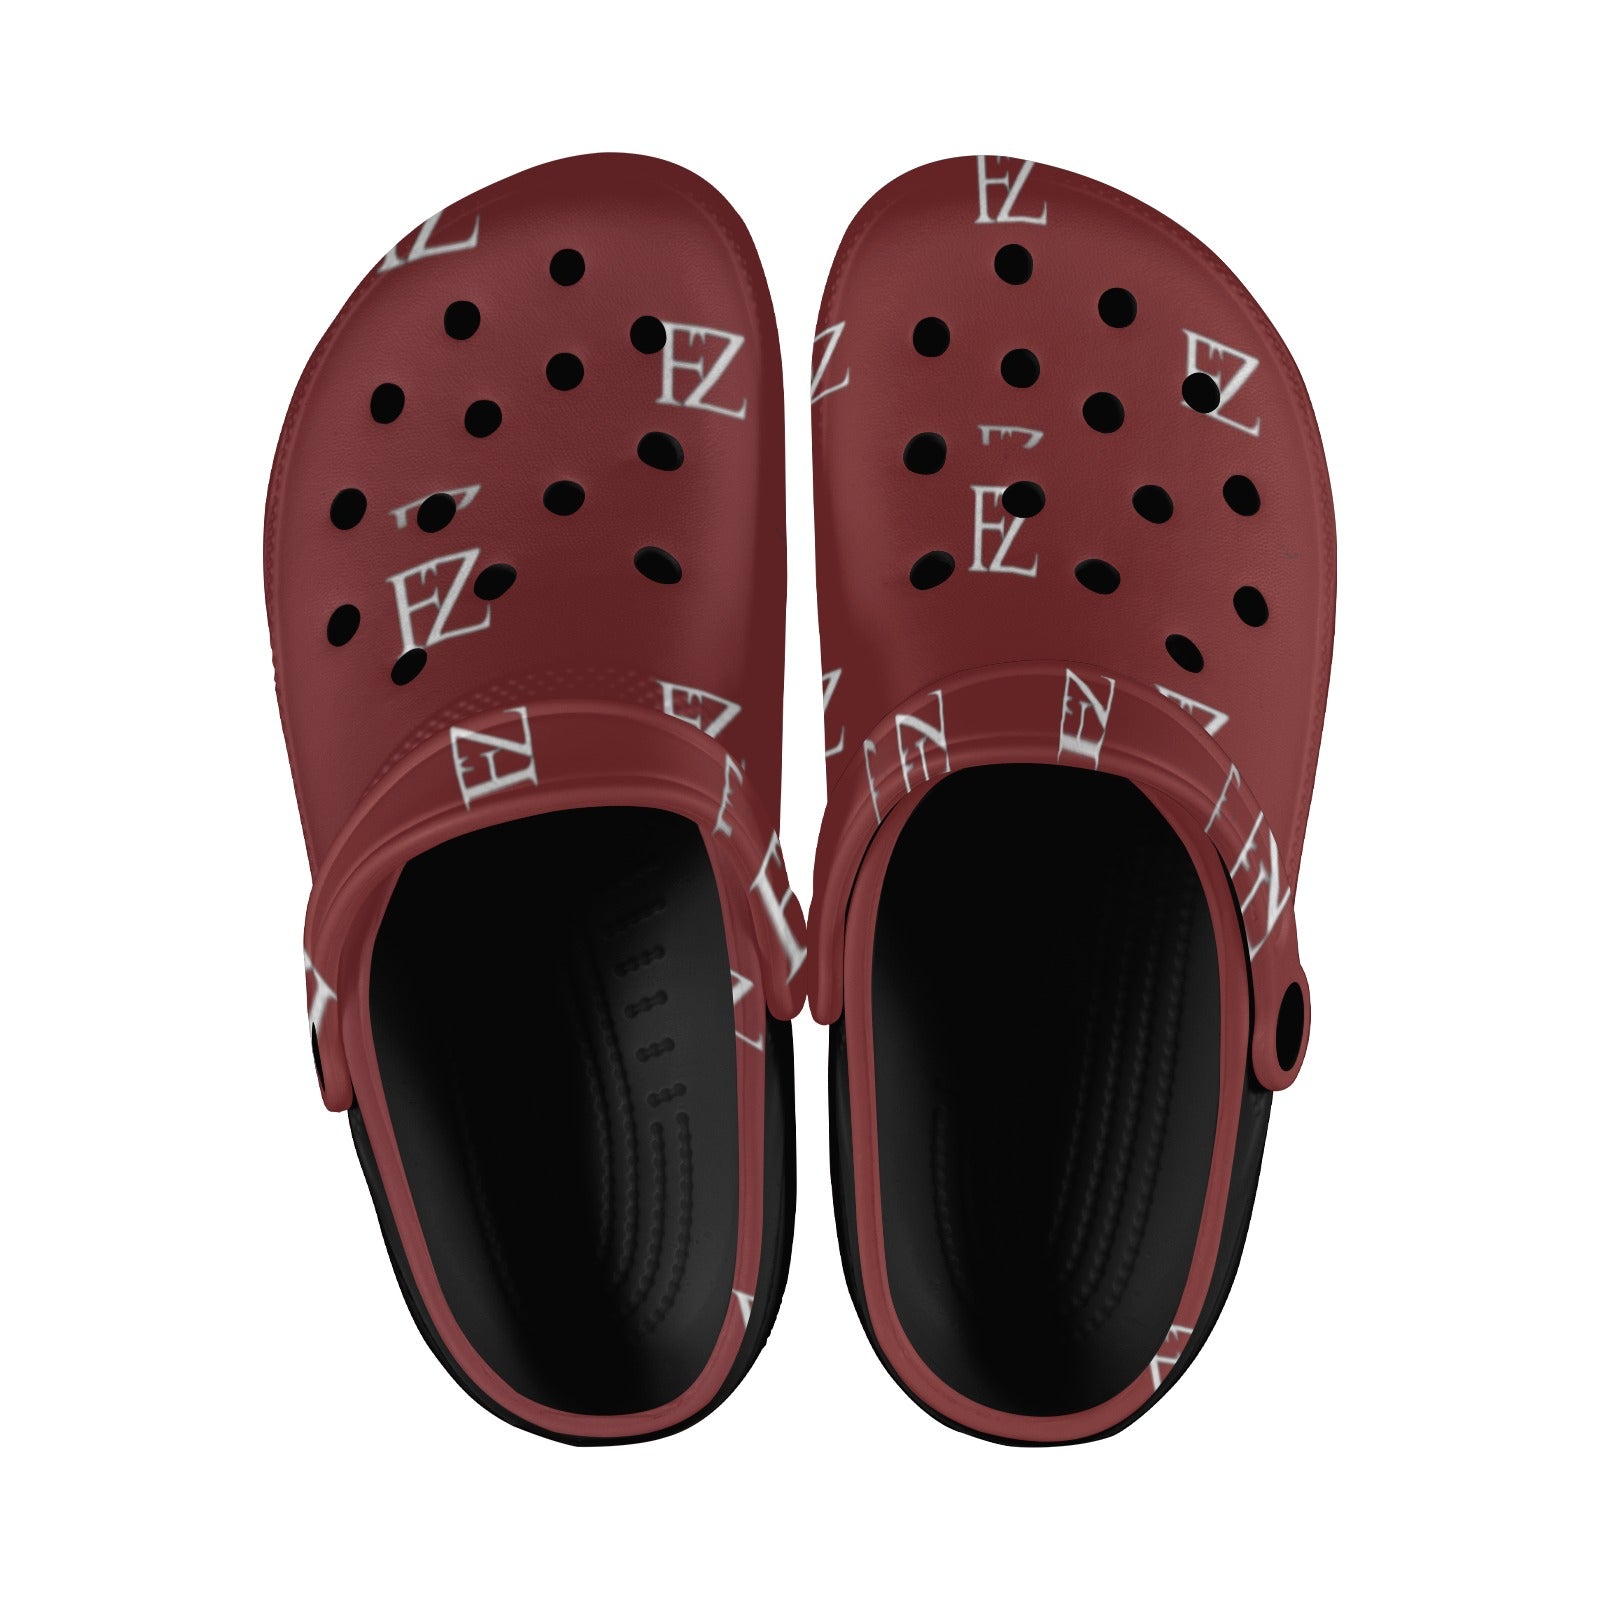 fz unisex sandals - burgundy custom print adults clogs